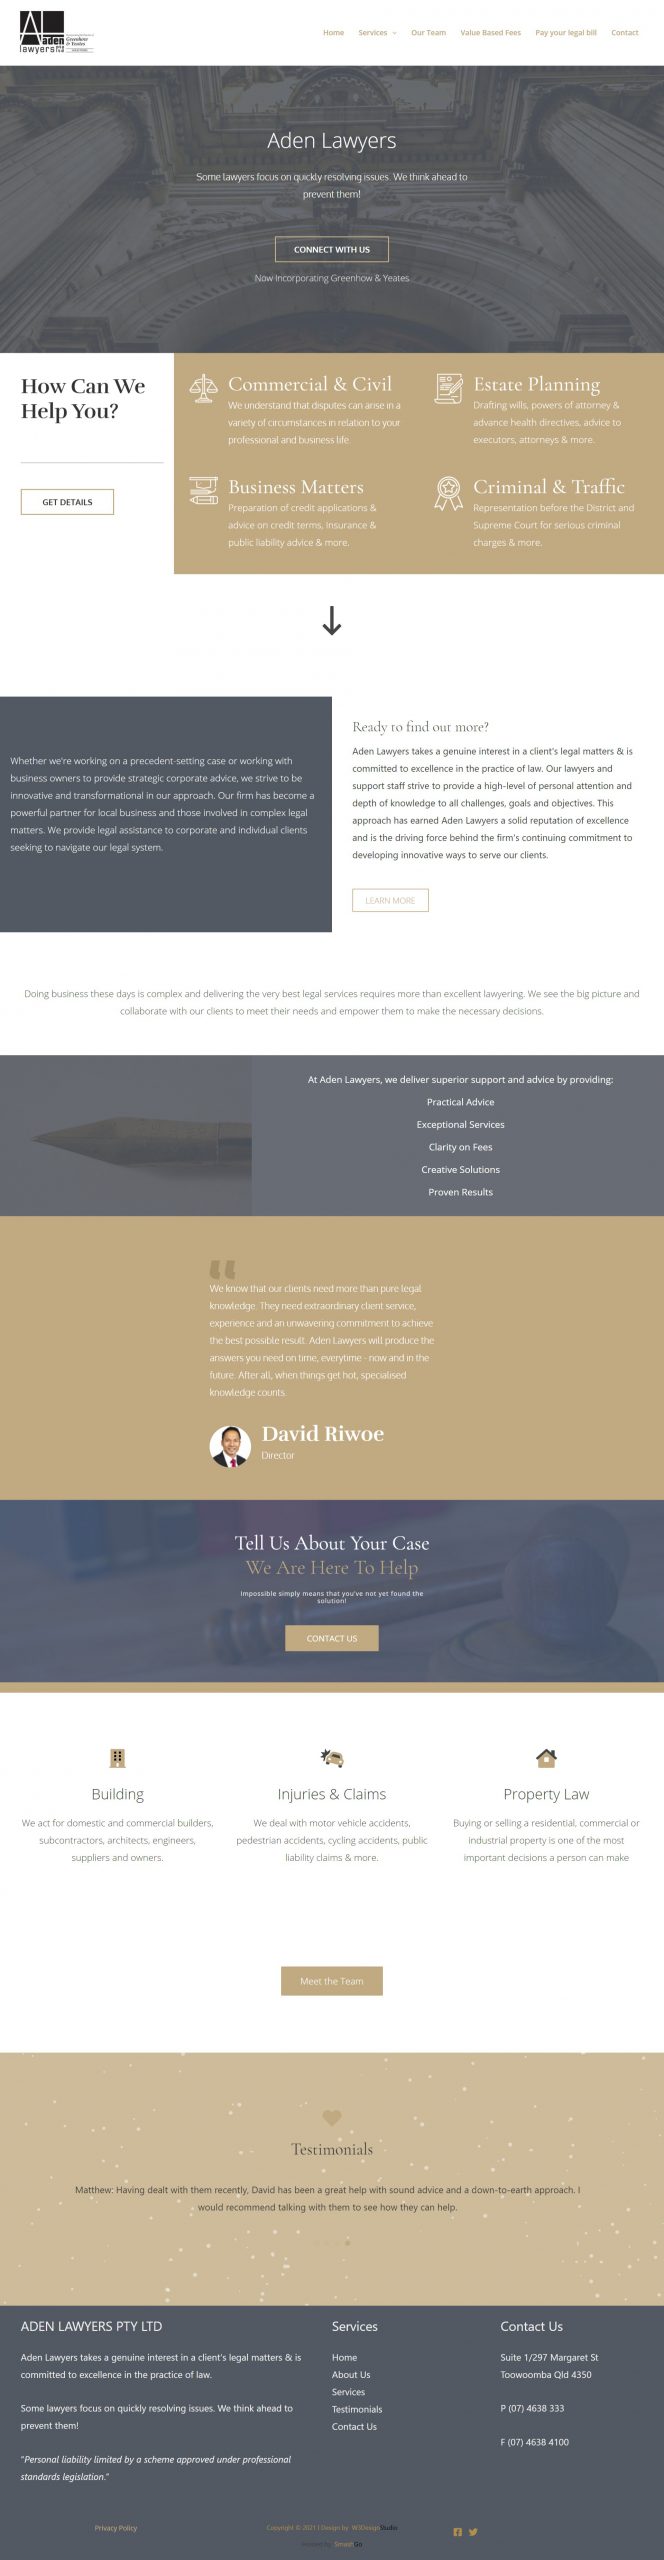 Aden Lawyers homepage screenshot